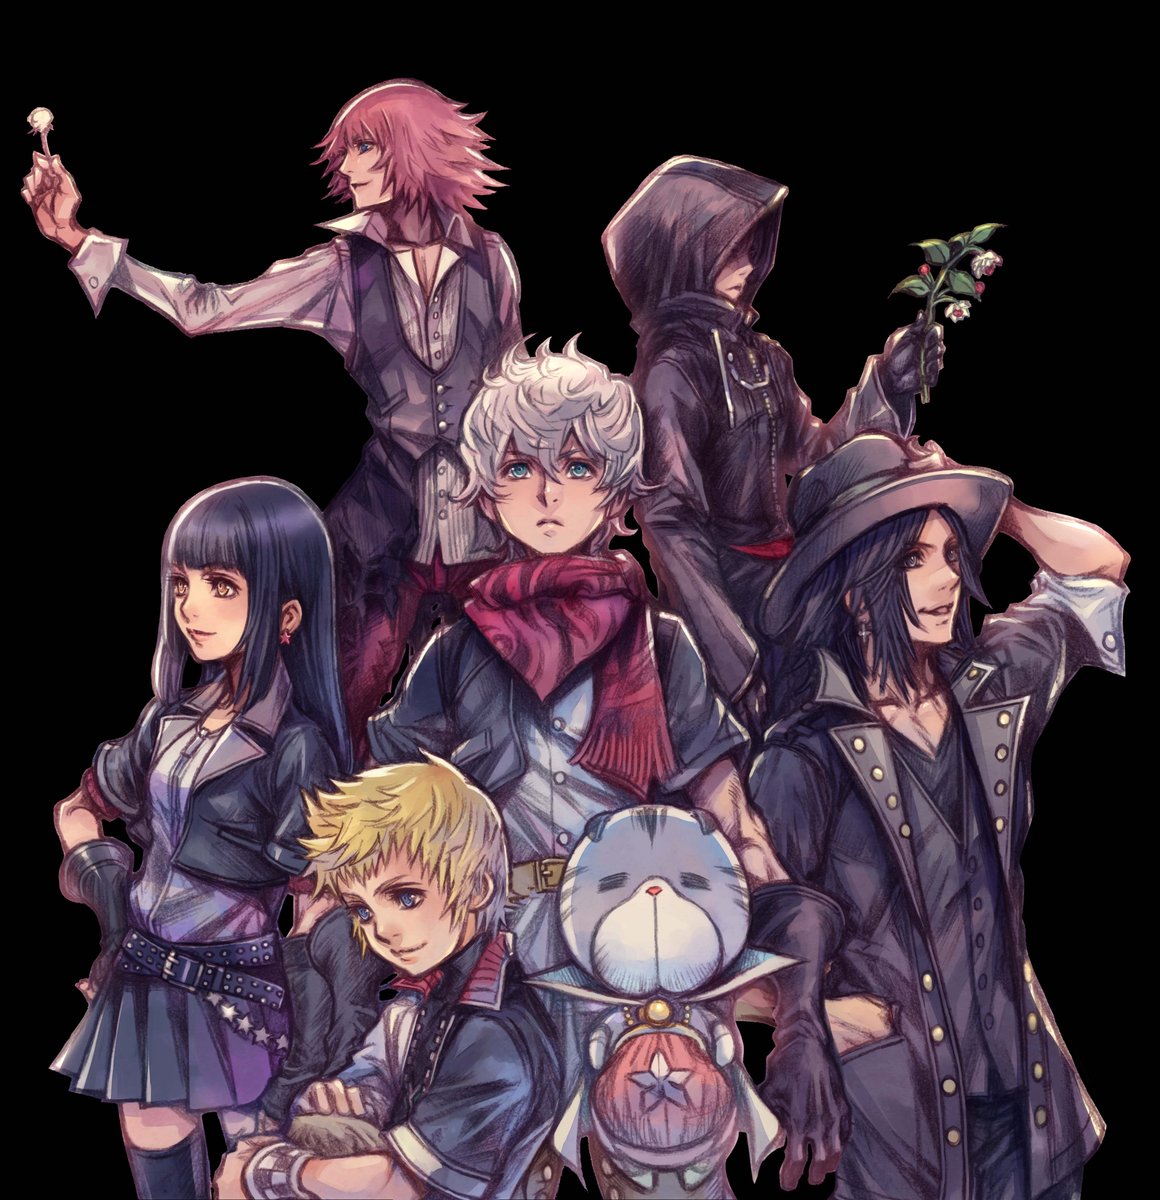 Character Avatars Art - Kingdom Hearts Union χ [Cross] Art Gallery